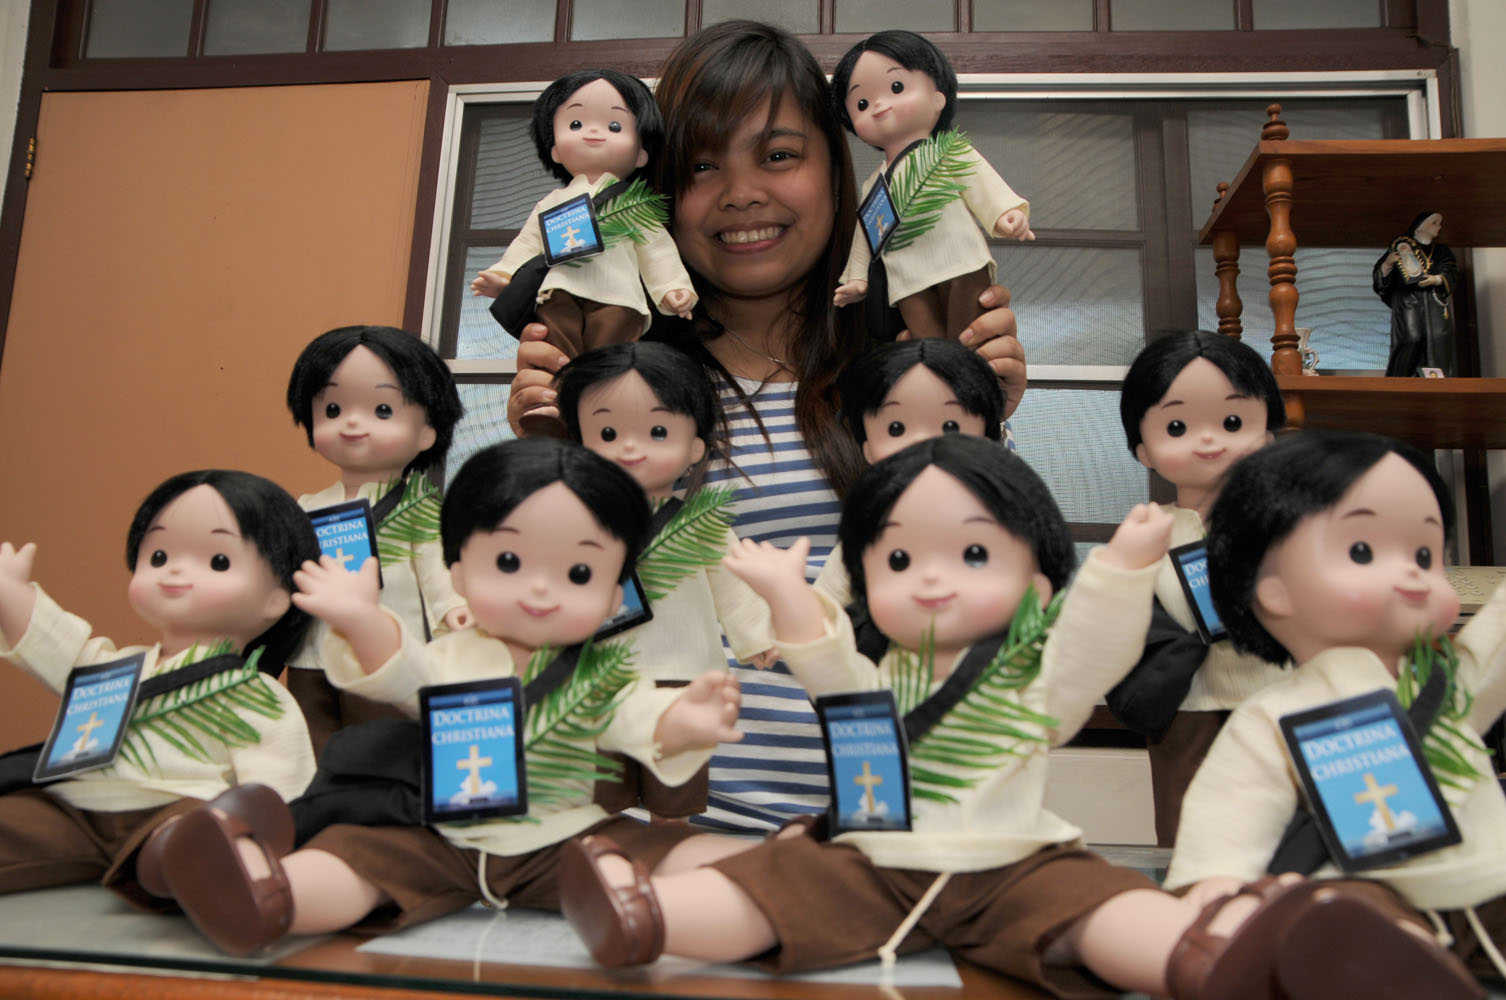 Sales of Calungsod dolls help rebuild churches